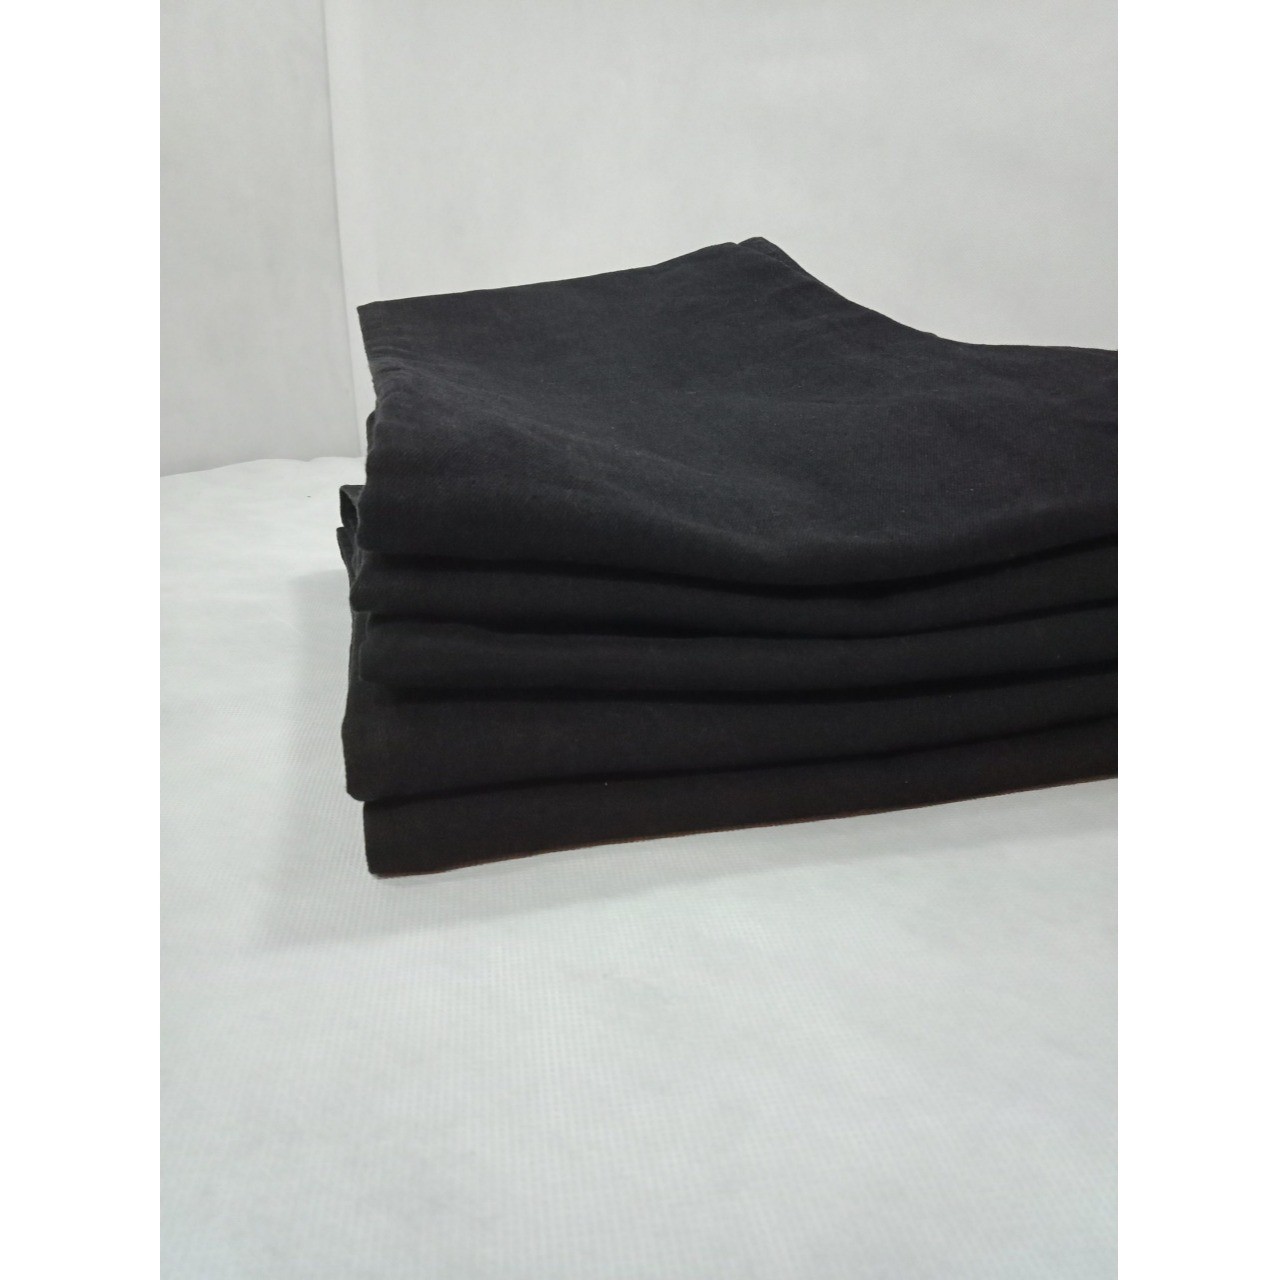 Stretchable Jeans For Men - Export Quality - Stooker Black